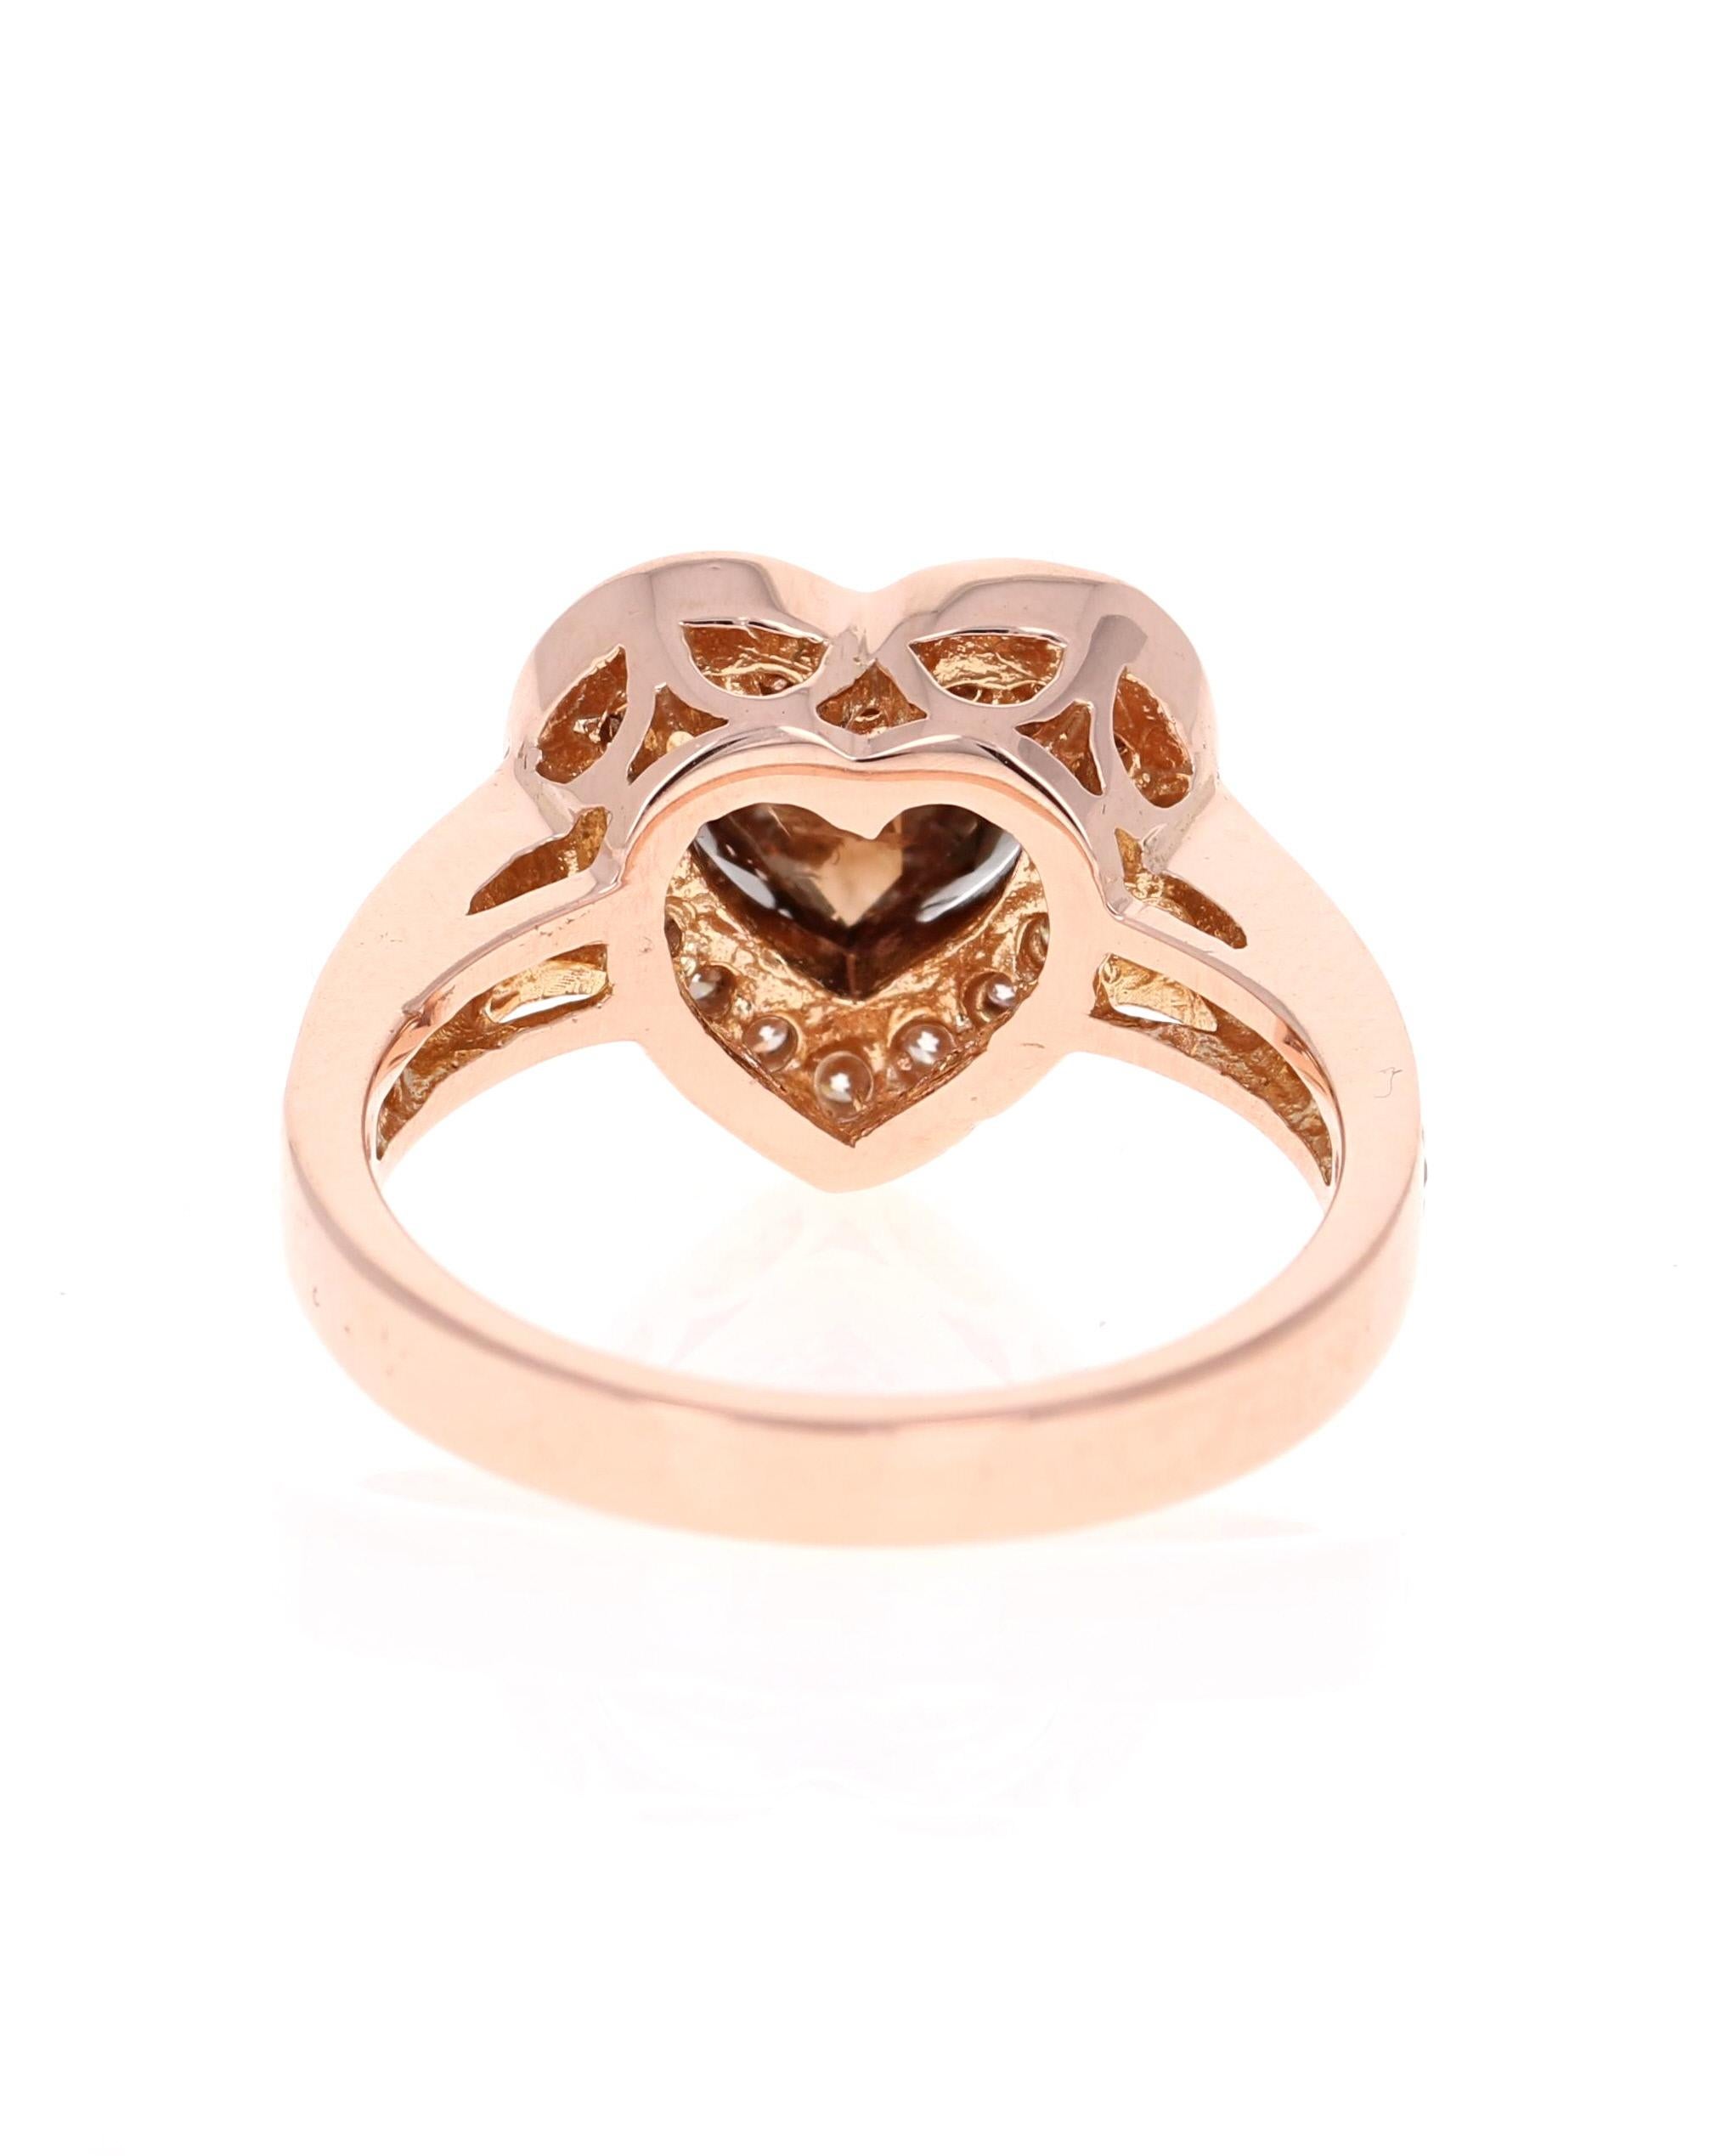 Modern 2.43 Carat Heart Cut Fancy Diamond Engagement Ring 14 Karat Rose Gold